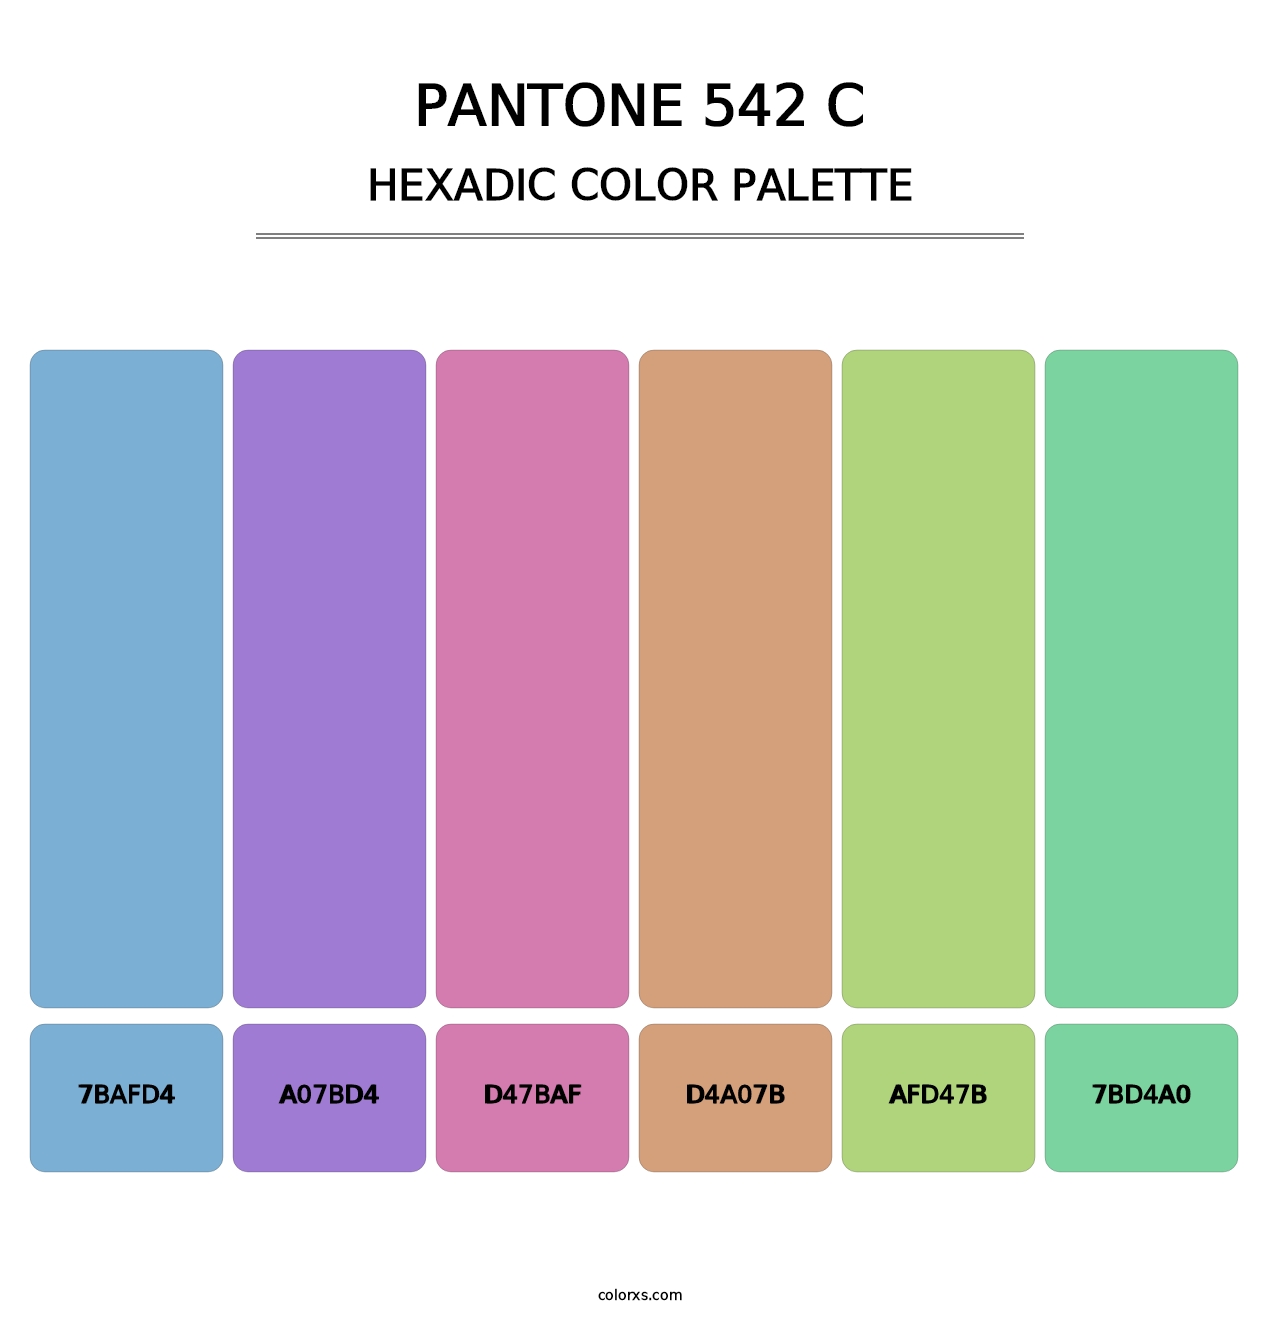 PANTONE 542 C - Hexadic Color Palette